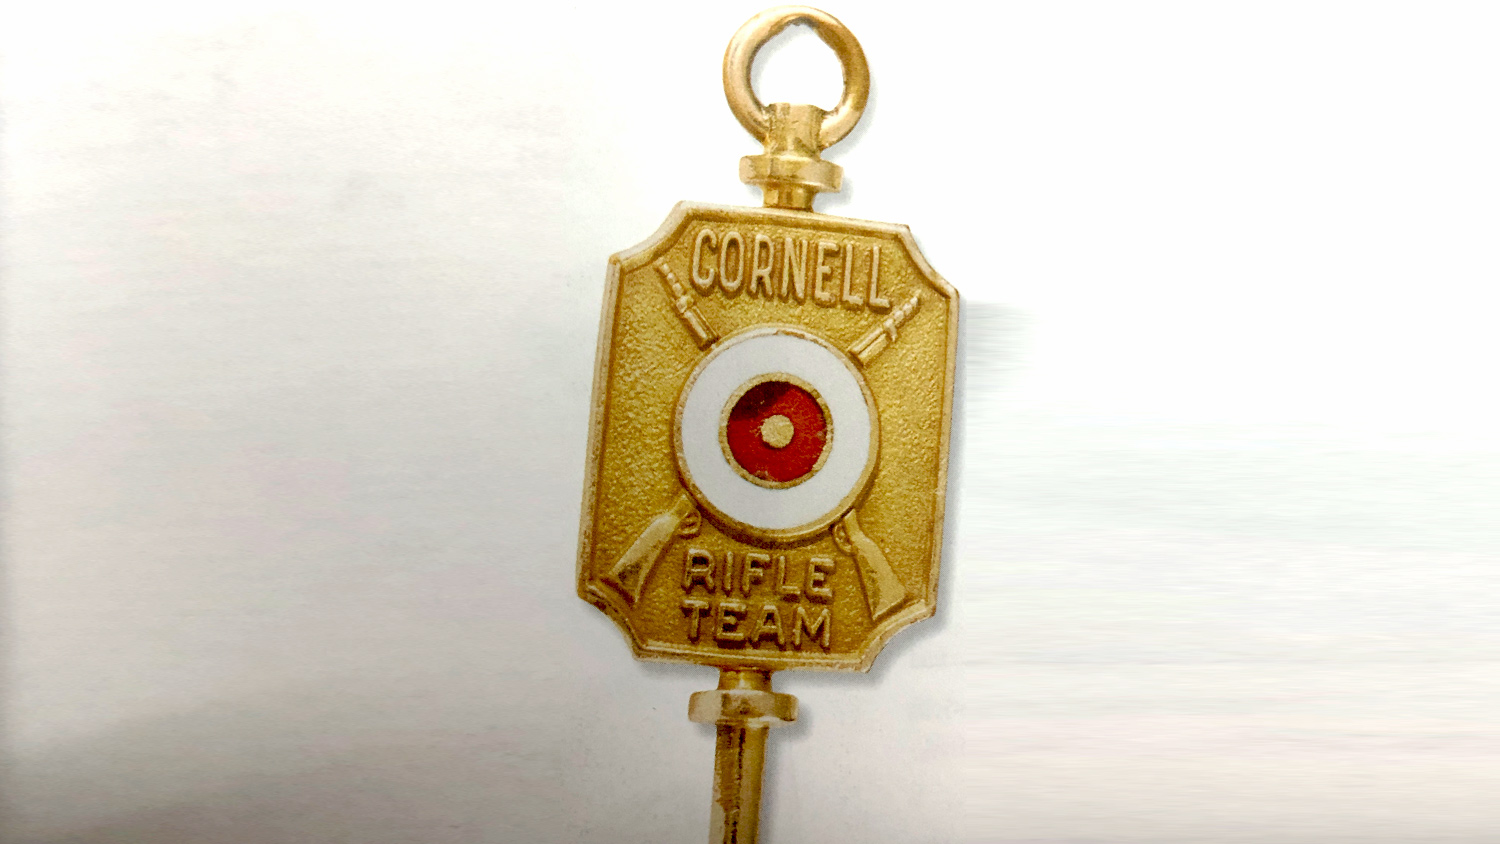 1938 Cornell rifle team key